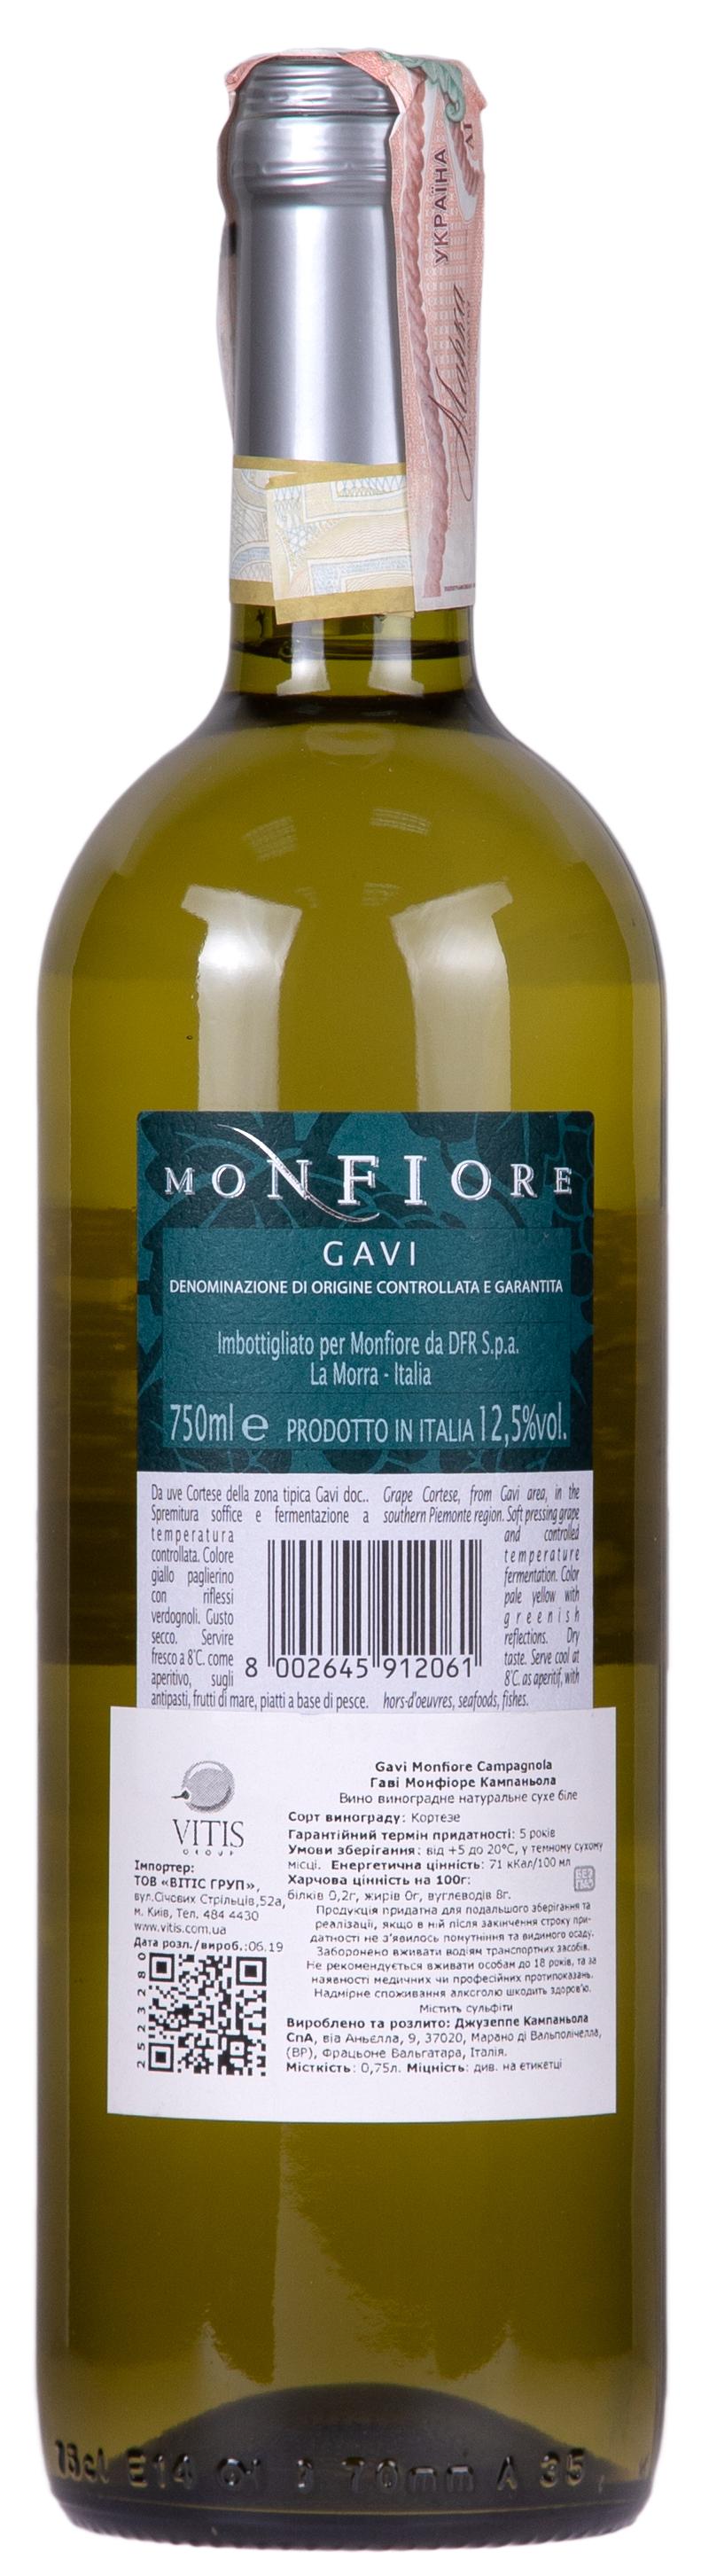 Campagnola Gavi Monfiore 2018 Set 6 bottles - 2